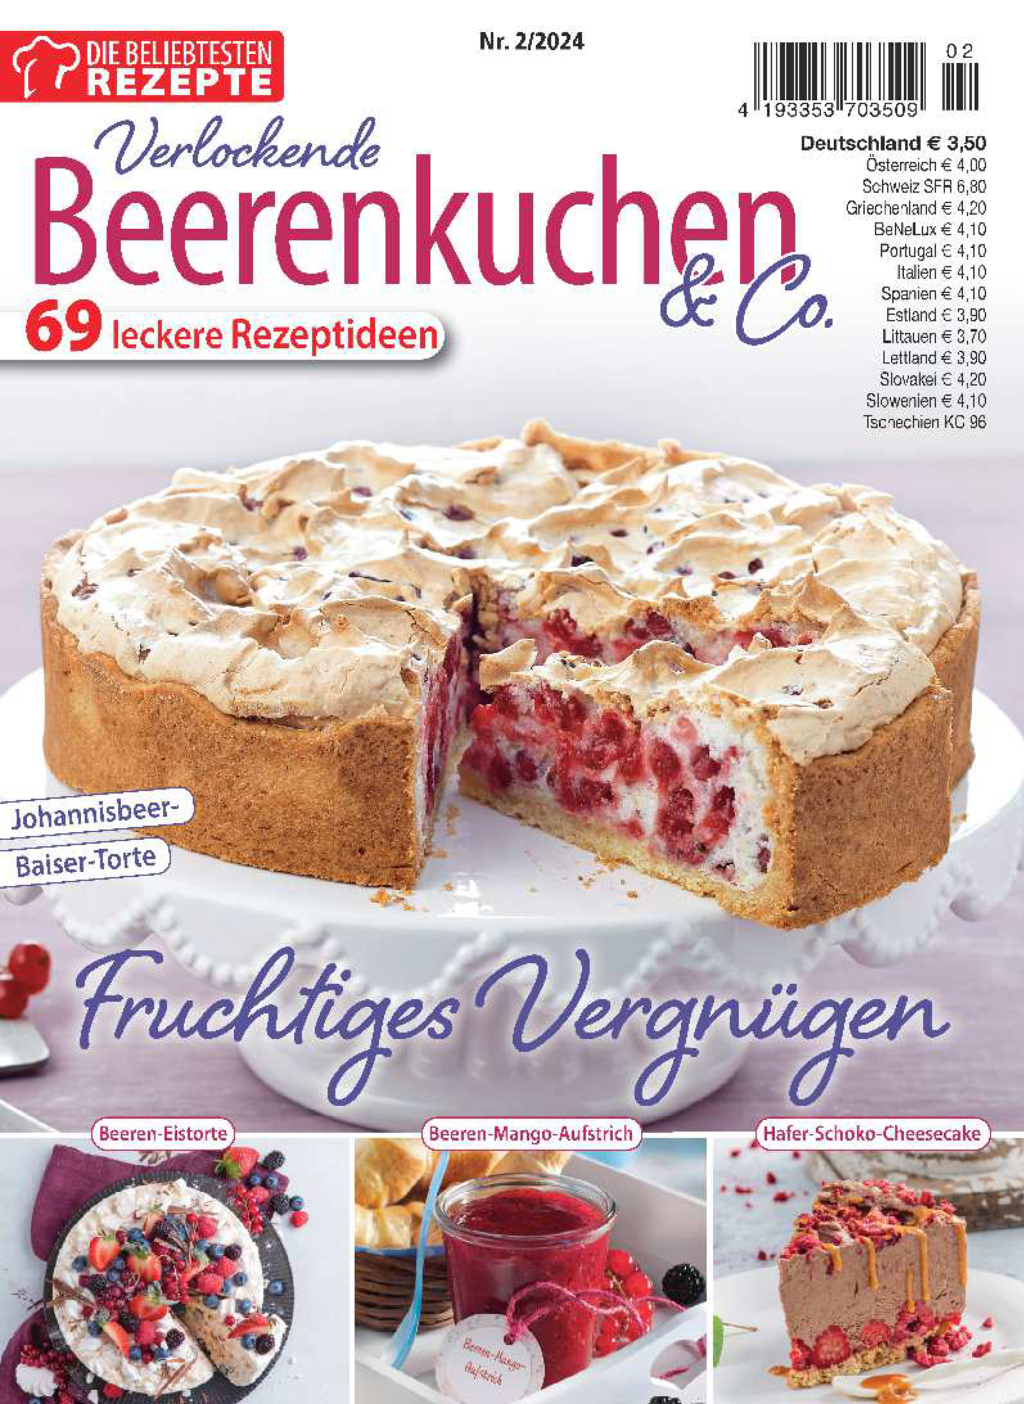 Die beliebtesten Rezepte 2/2024 - Beerenkuchen & Co.